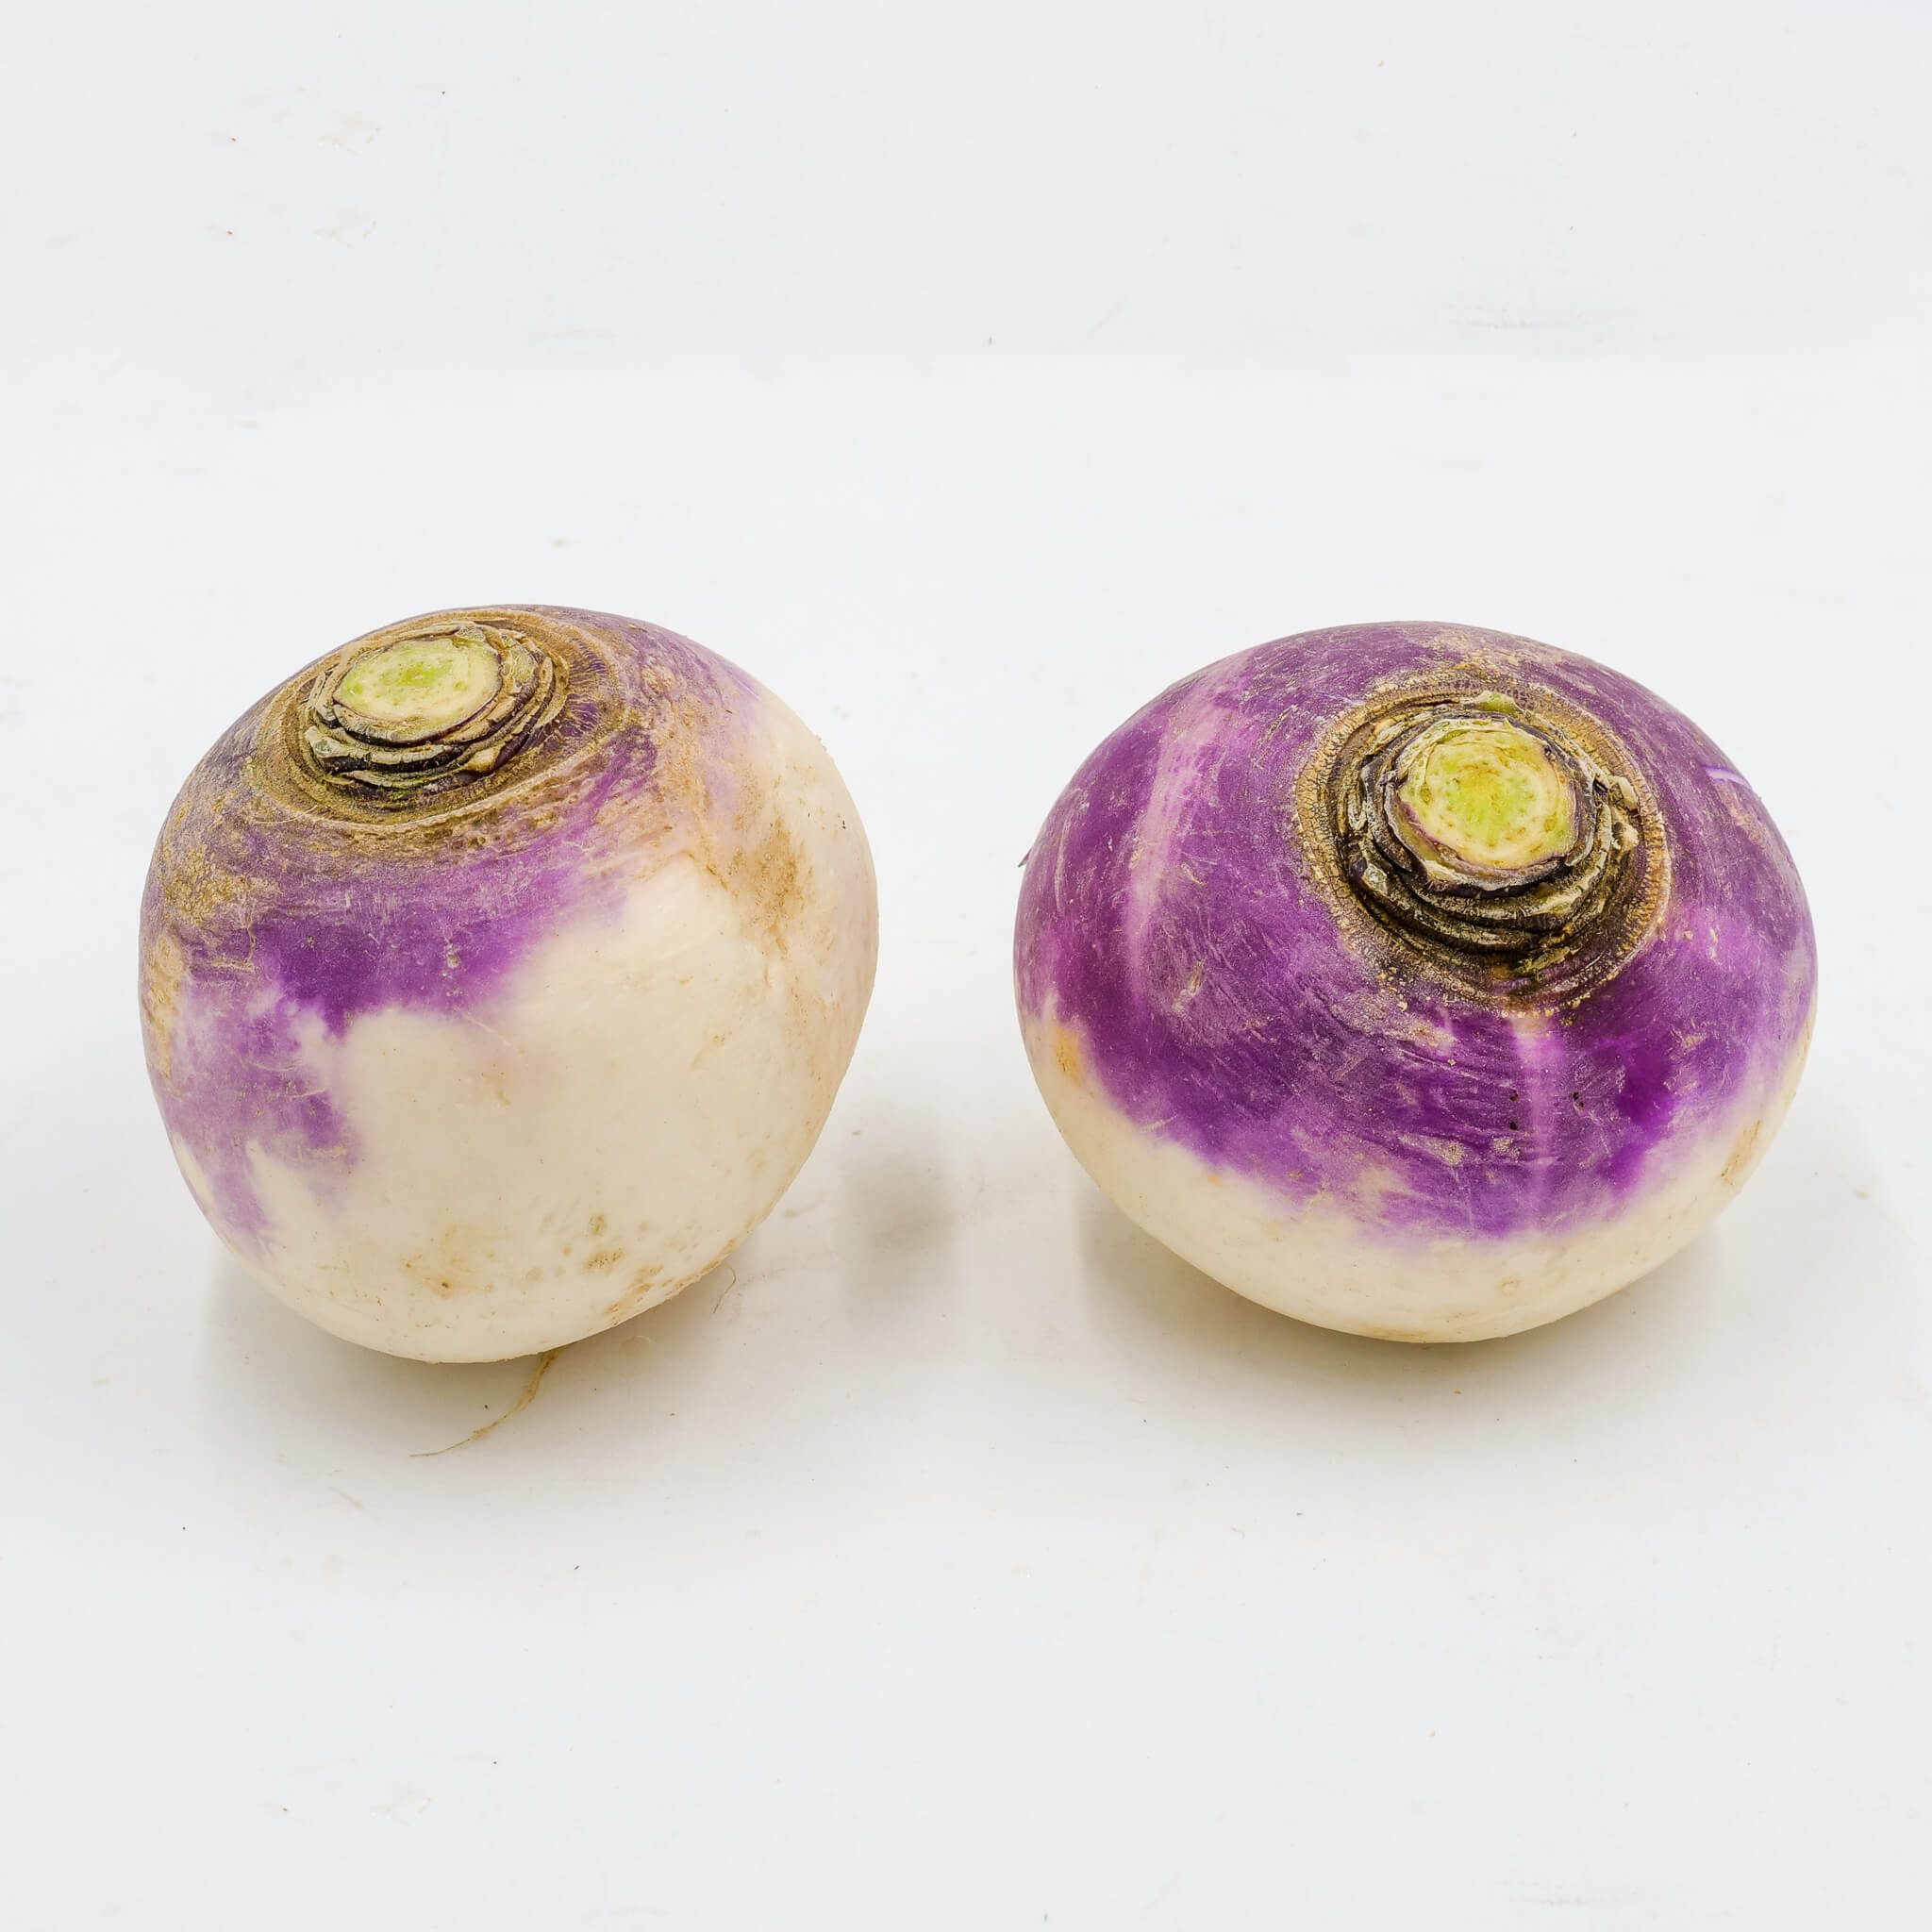 La Légumière, the specialist in Breton and seasonal vegetables! Purple turnip